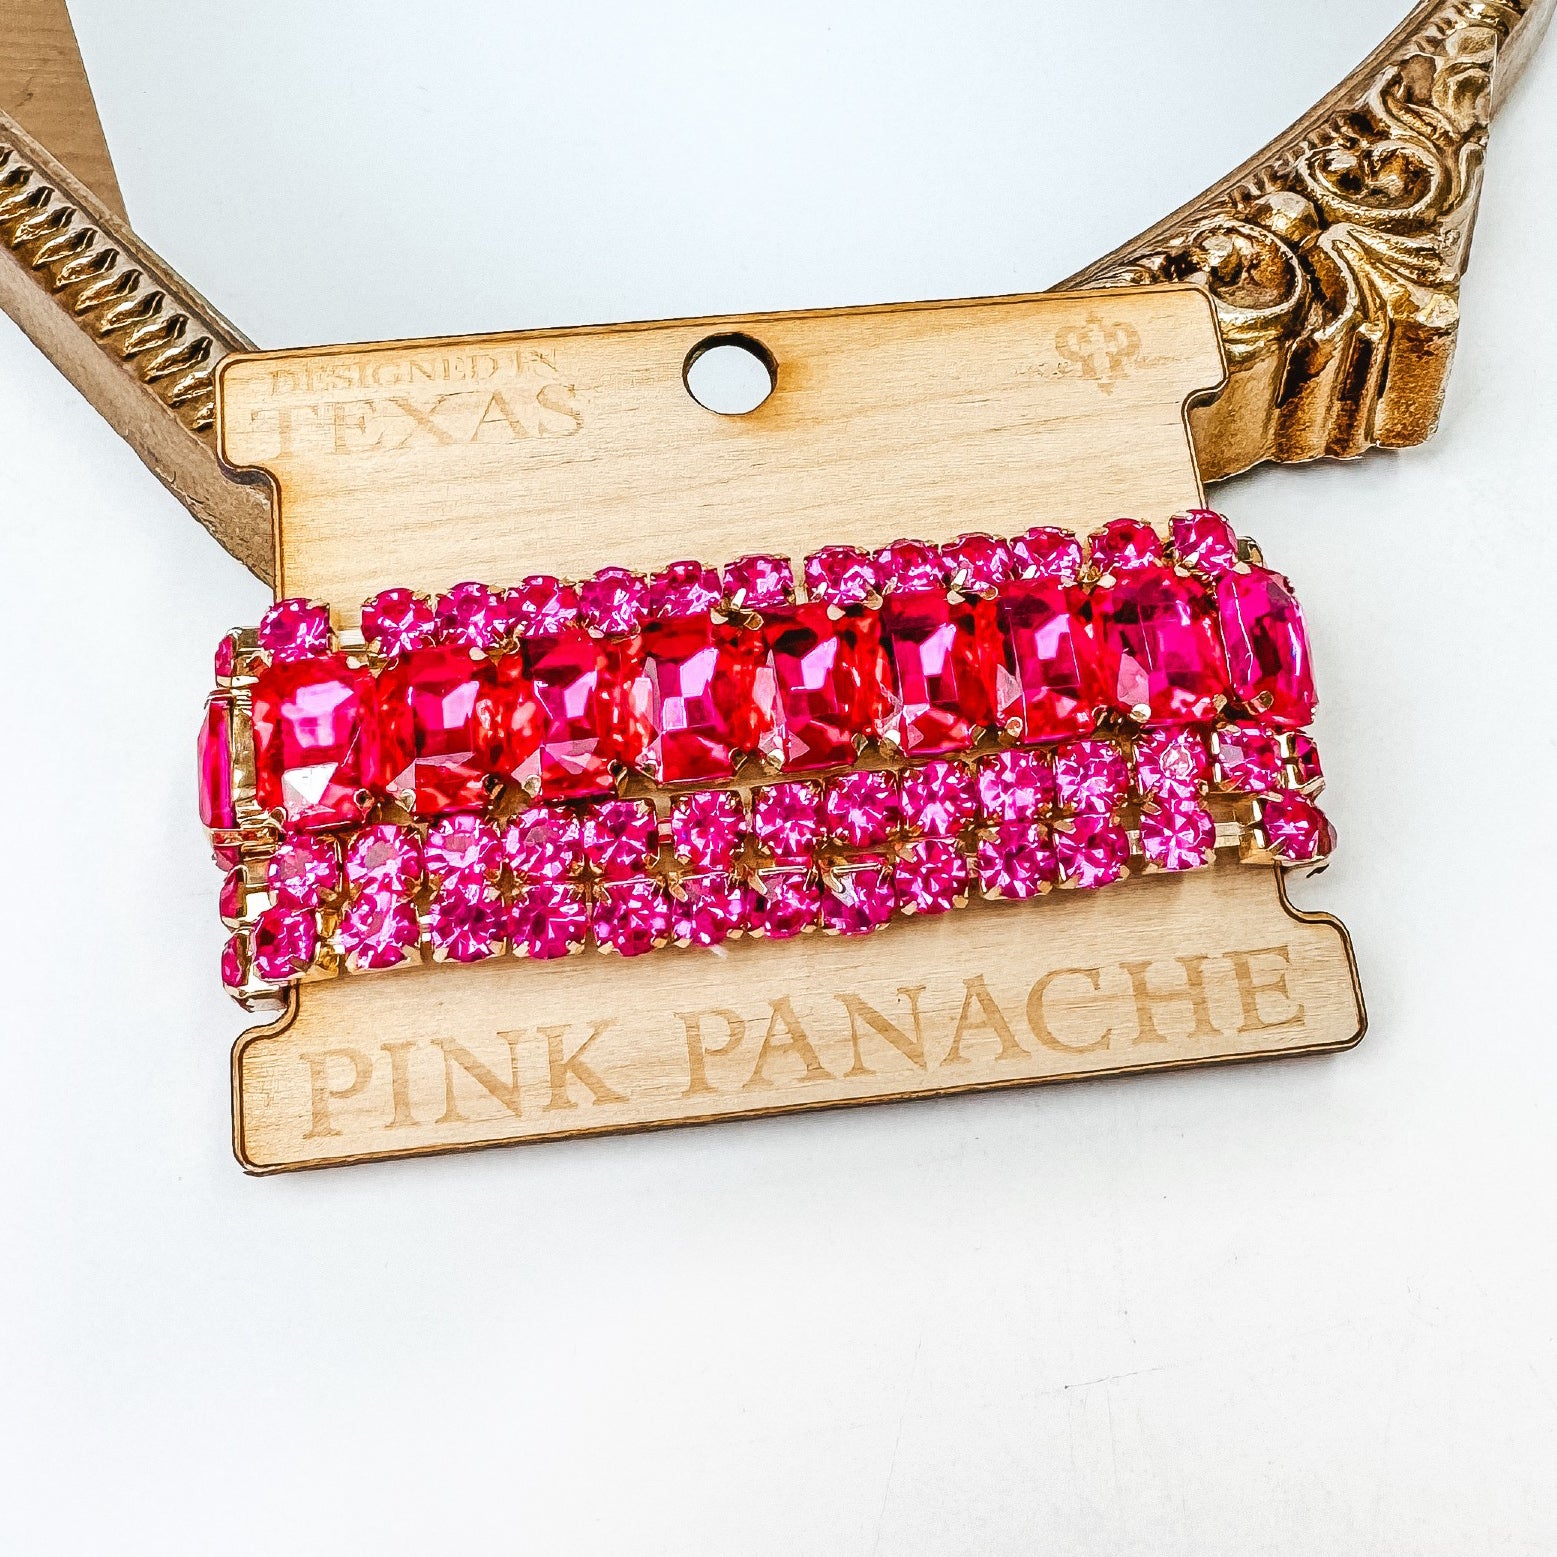 Pink Panache | Gold Tone Rhinestone Bracelet Set in Fuchsia Pink - Giddy Up Glamour Boutique